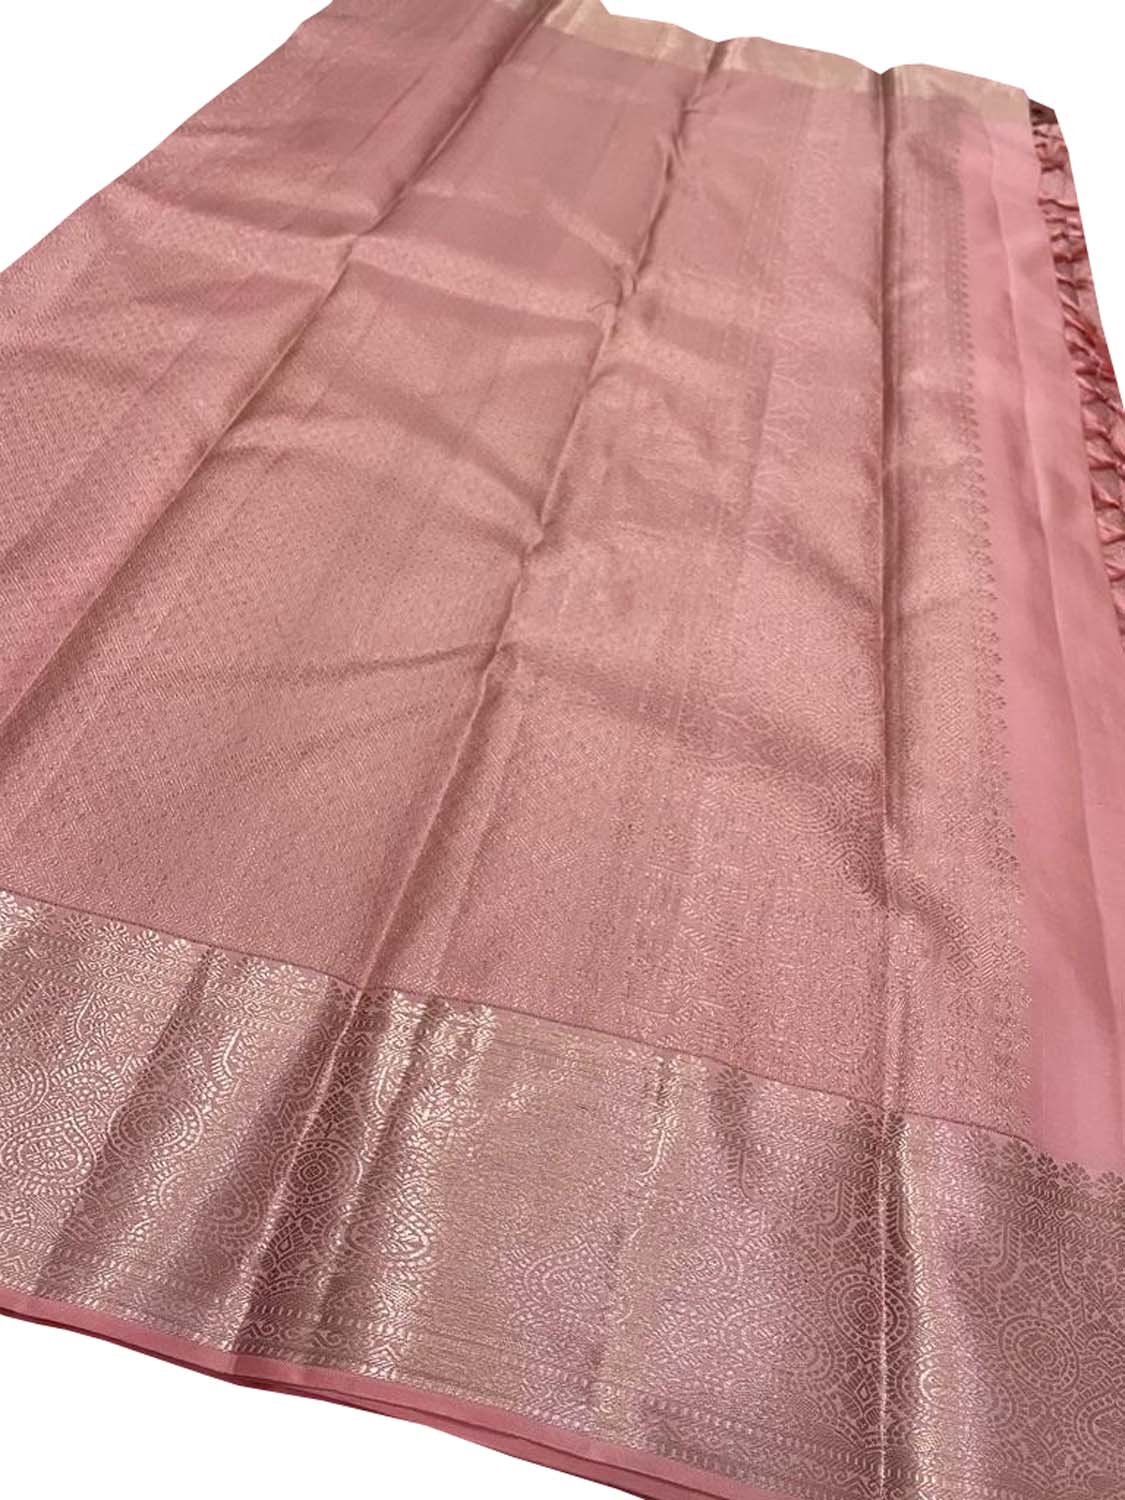 Exquisite Pink Kanjeevaram Handloom Pure Silk Saree: A Timeless Elegance - Luxurion World